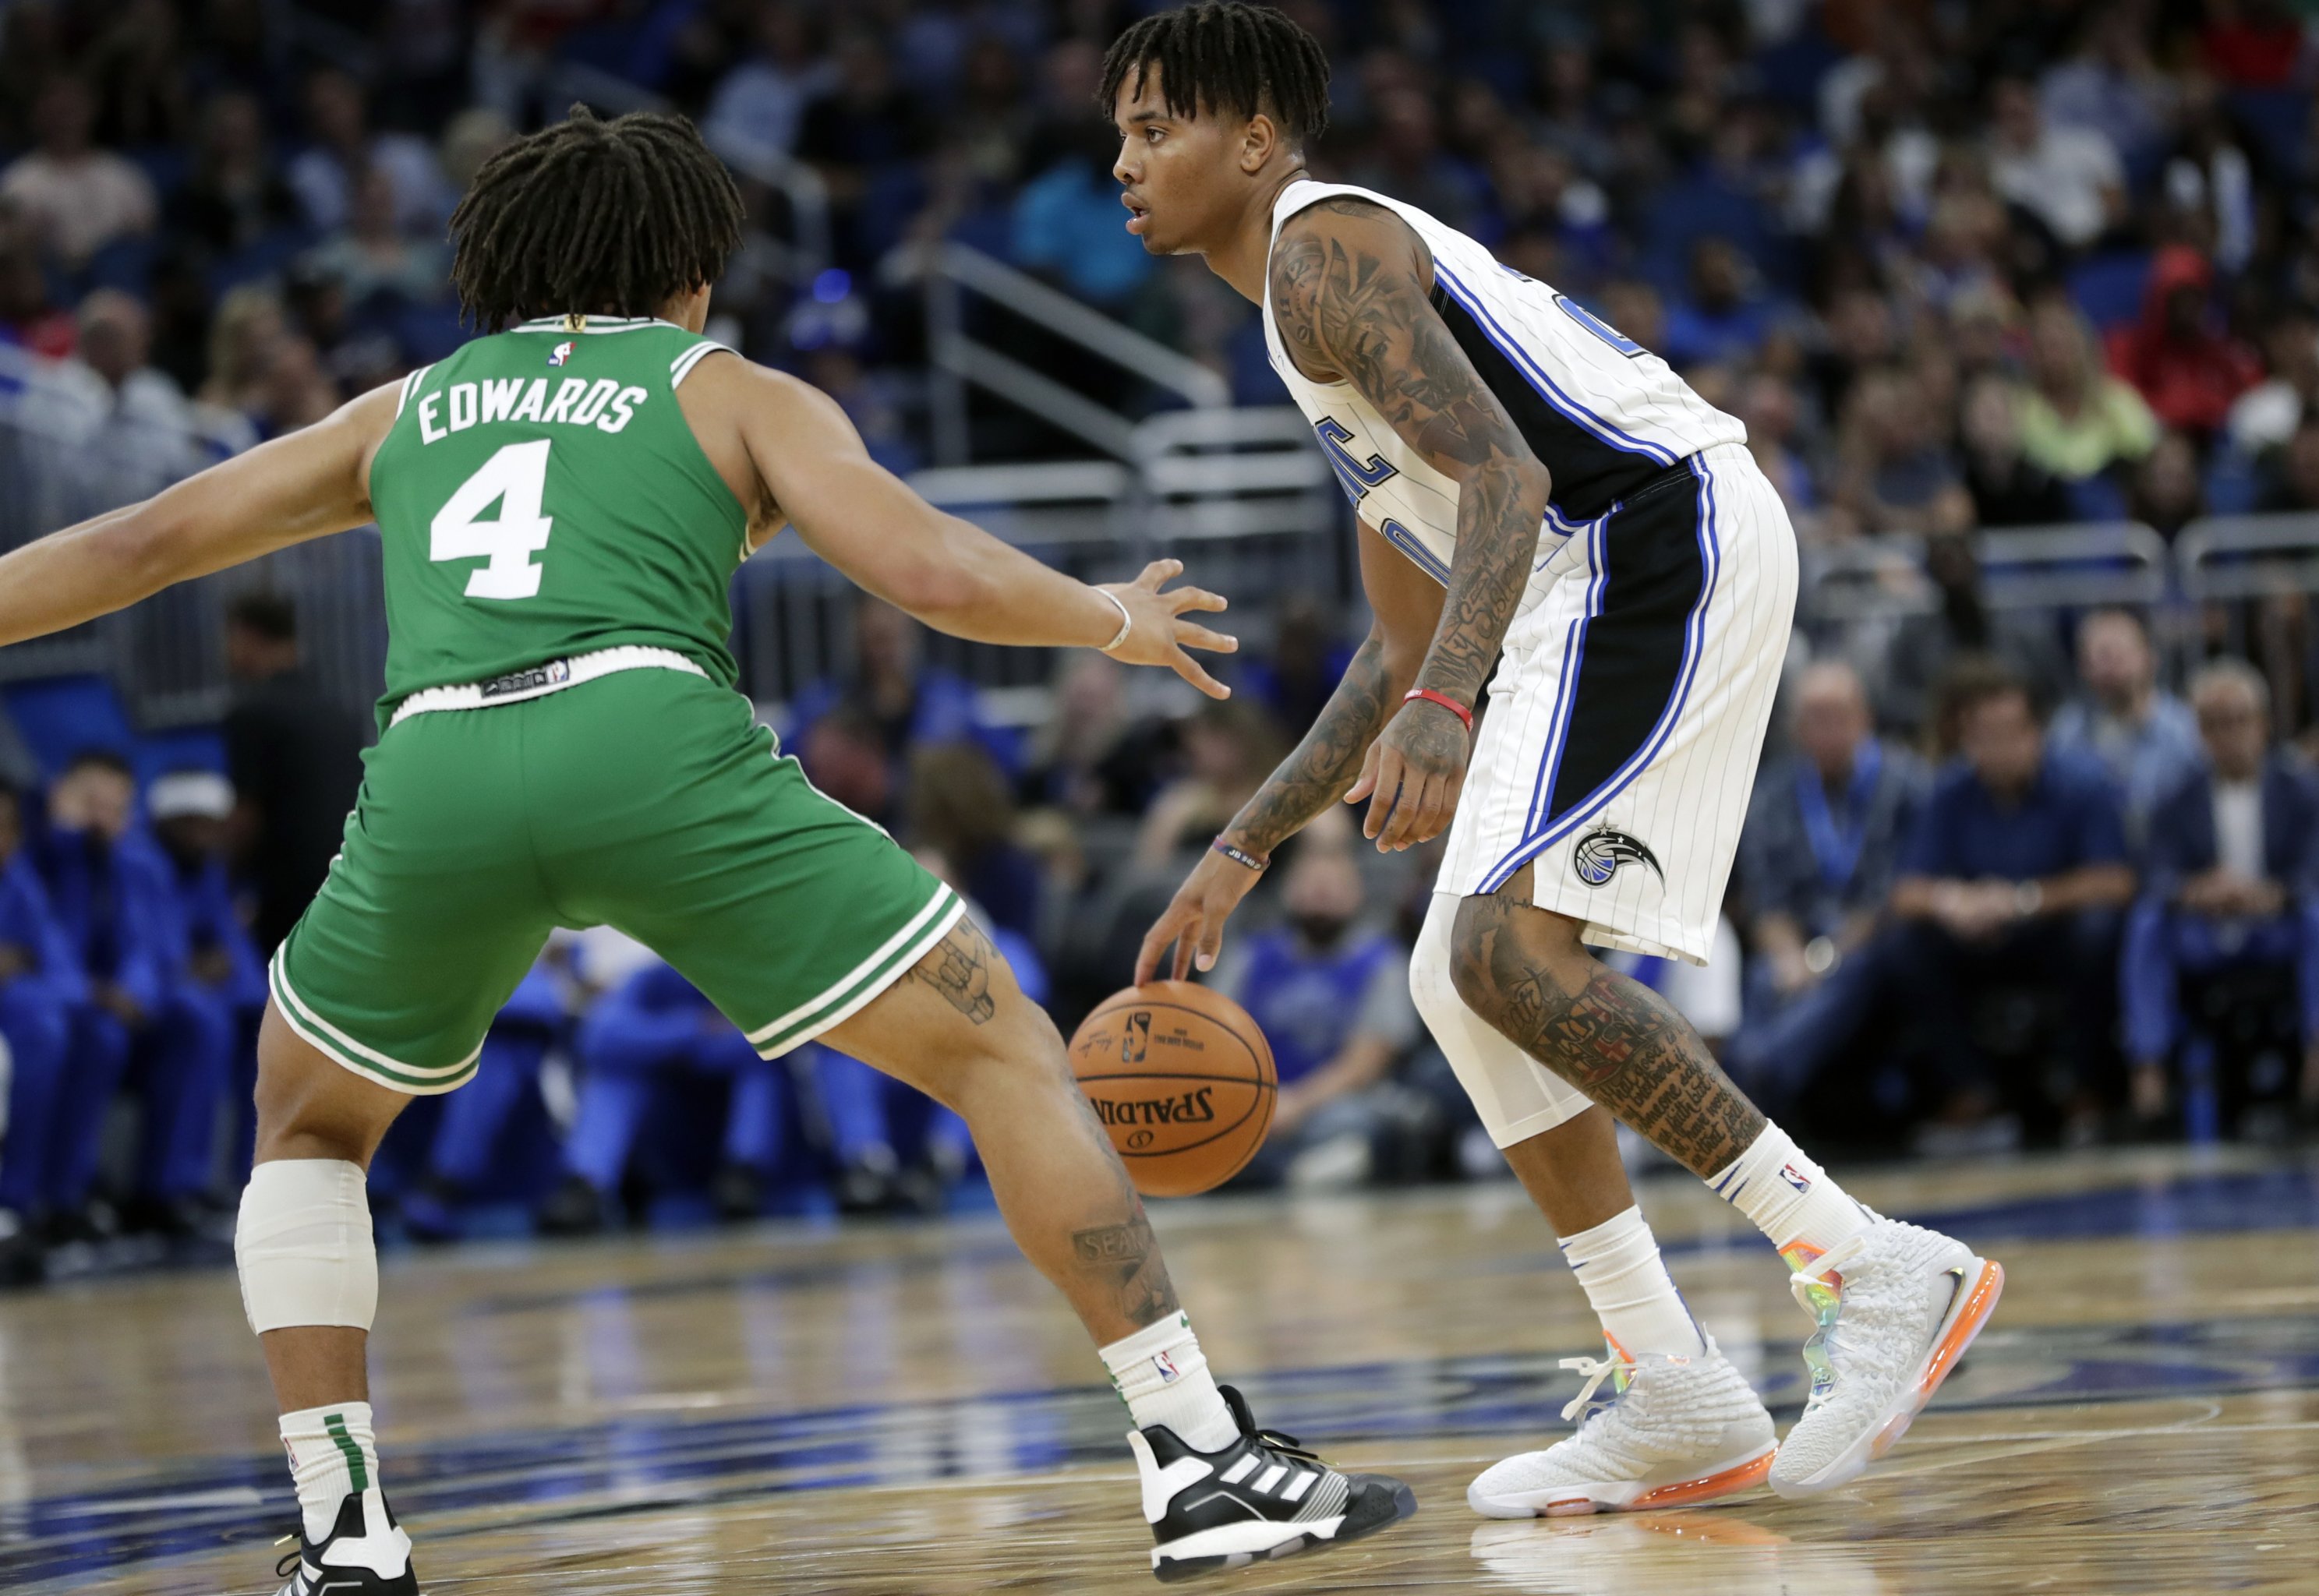 Blake Griffin takes subtle shot at Nets amid praise for Celtics